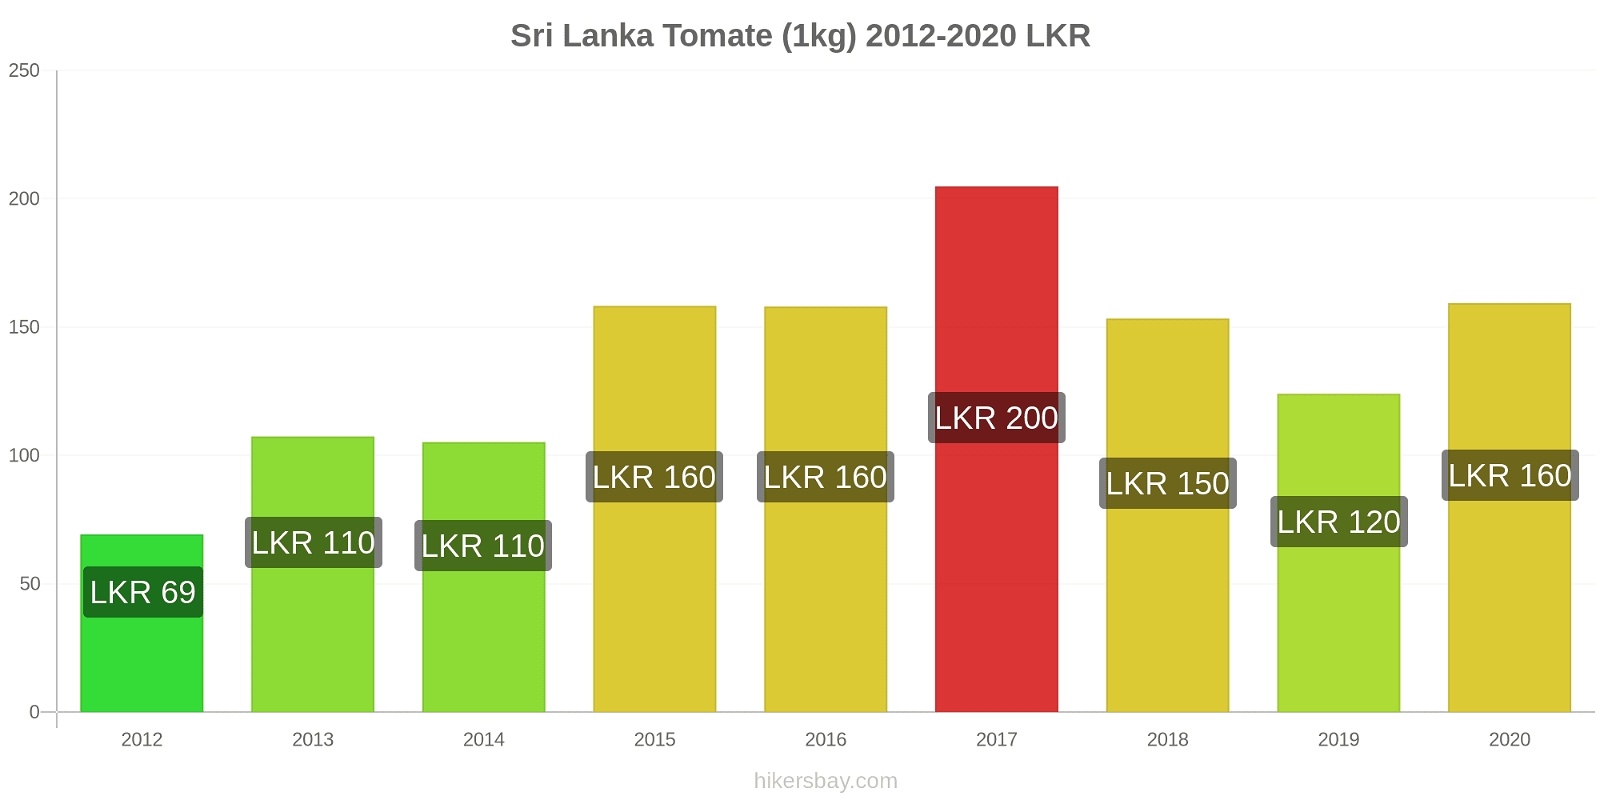 Sri Lanka changements de prix Tomate (1kg) hikersbay.com